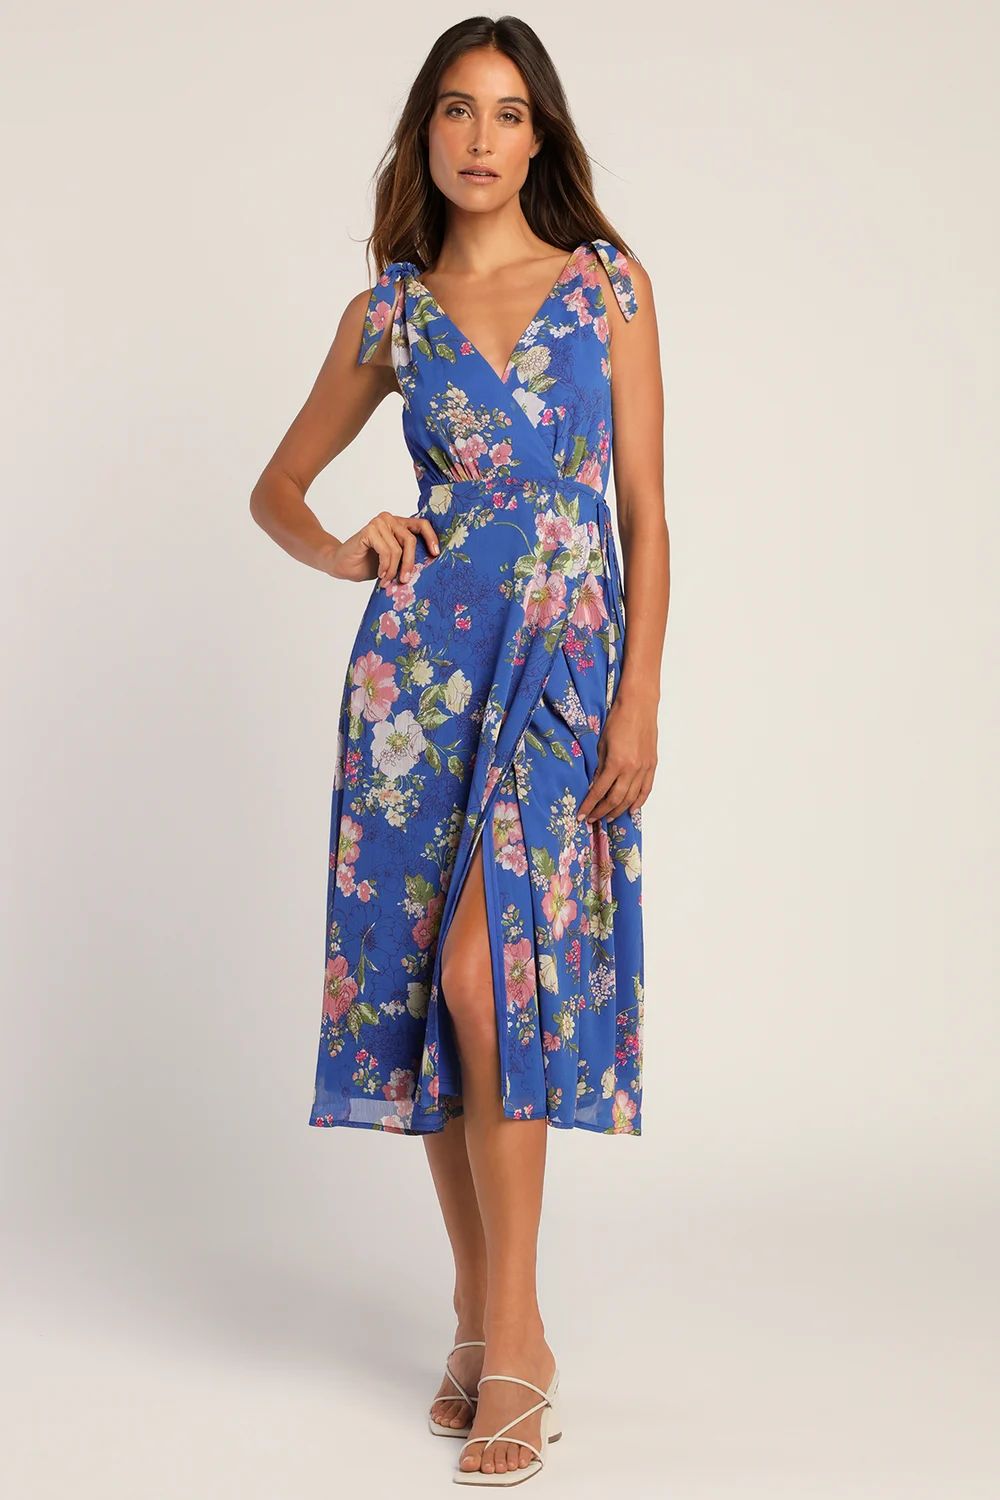 Sensational Season Blue Floral Print Tie-Strap Wrap Midi Dress | Lulus (US)